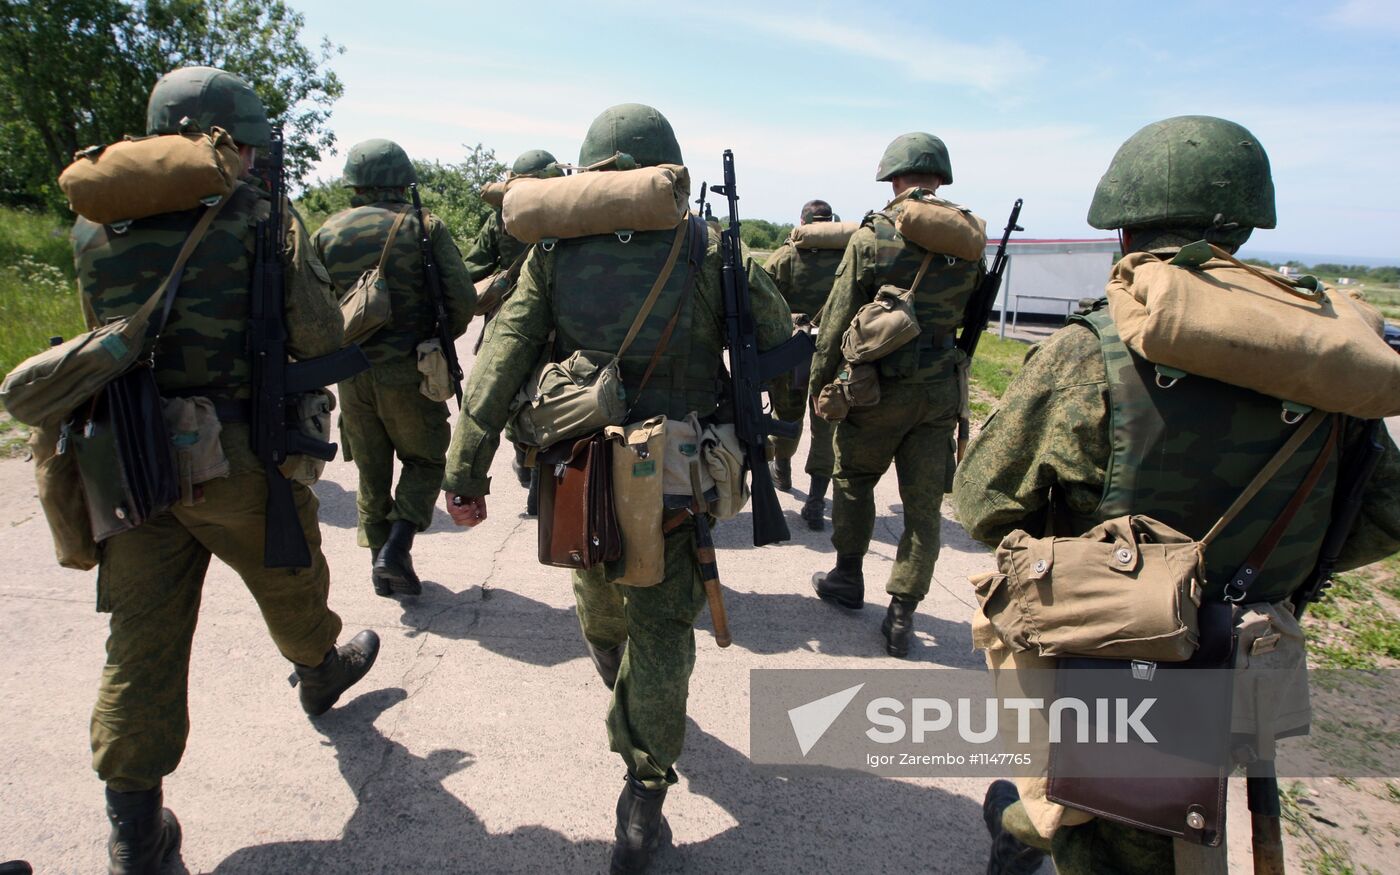 Combat training sessions for servicemen at Khmelevka range